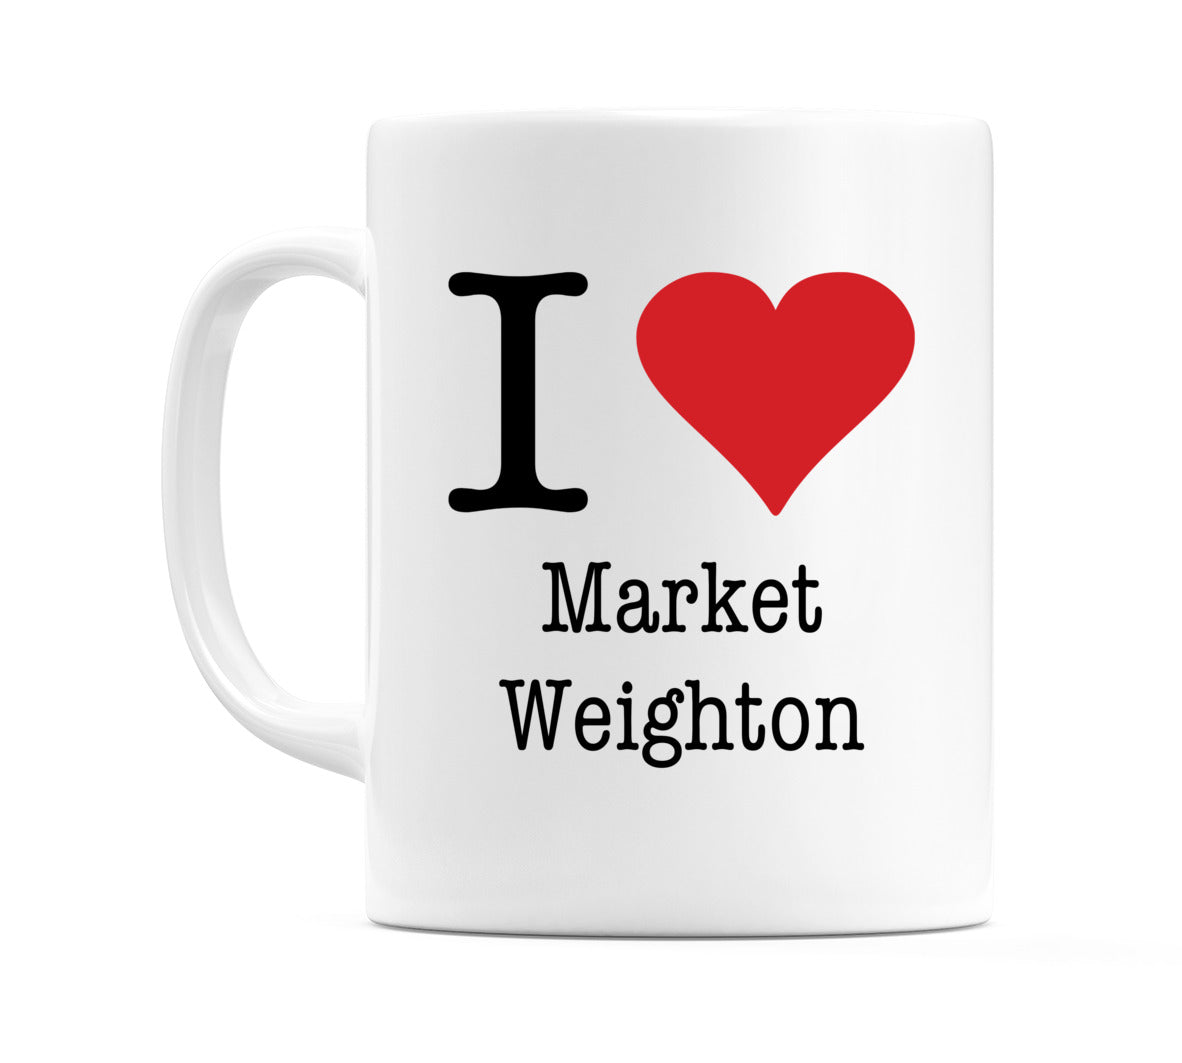 I Love Market Weighton Mug